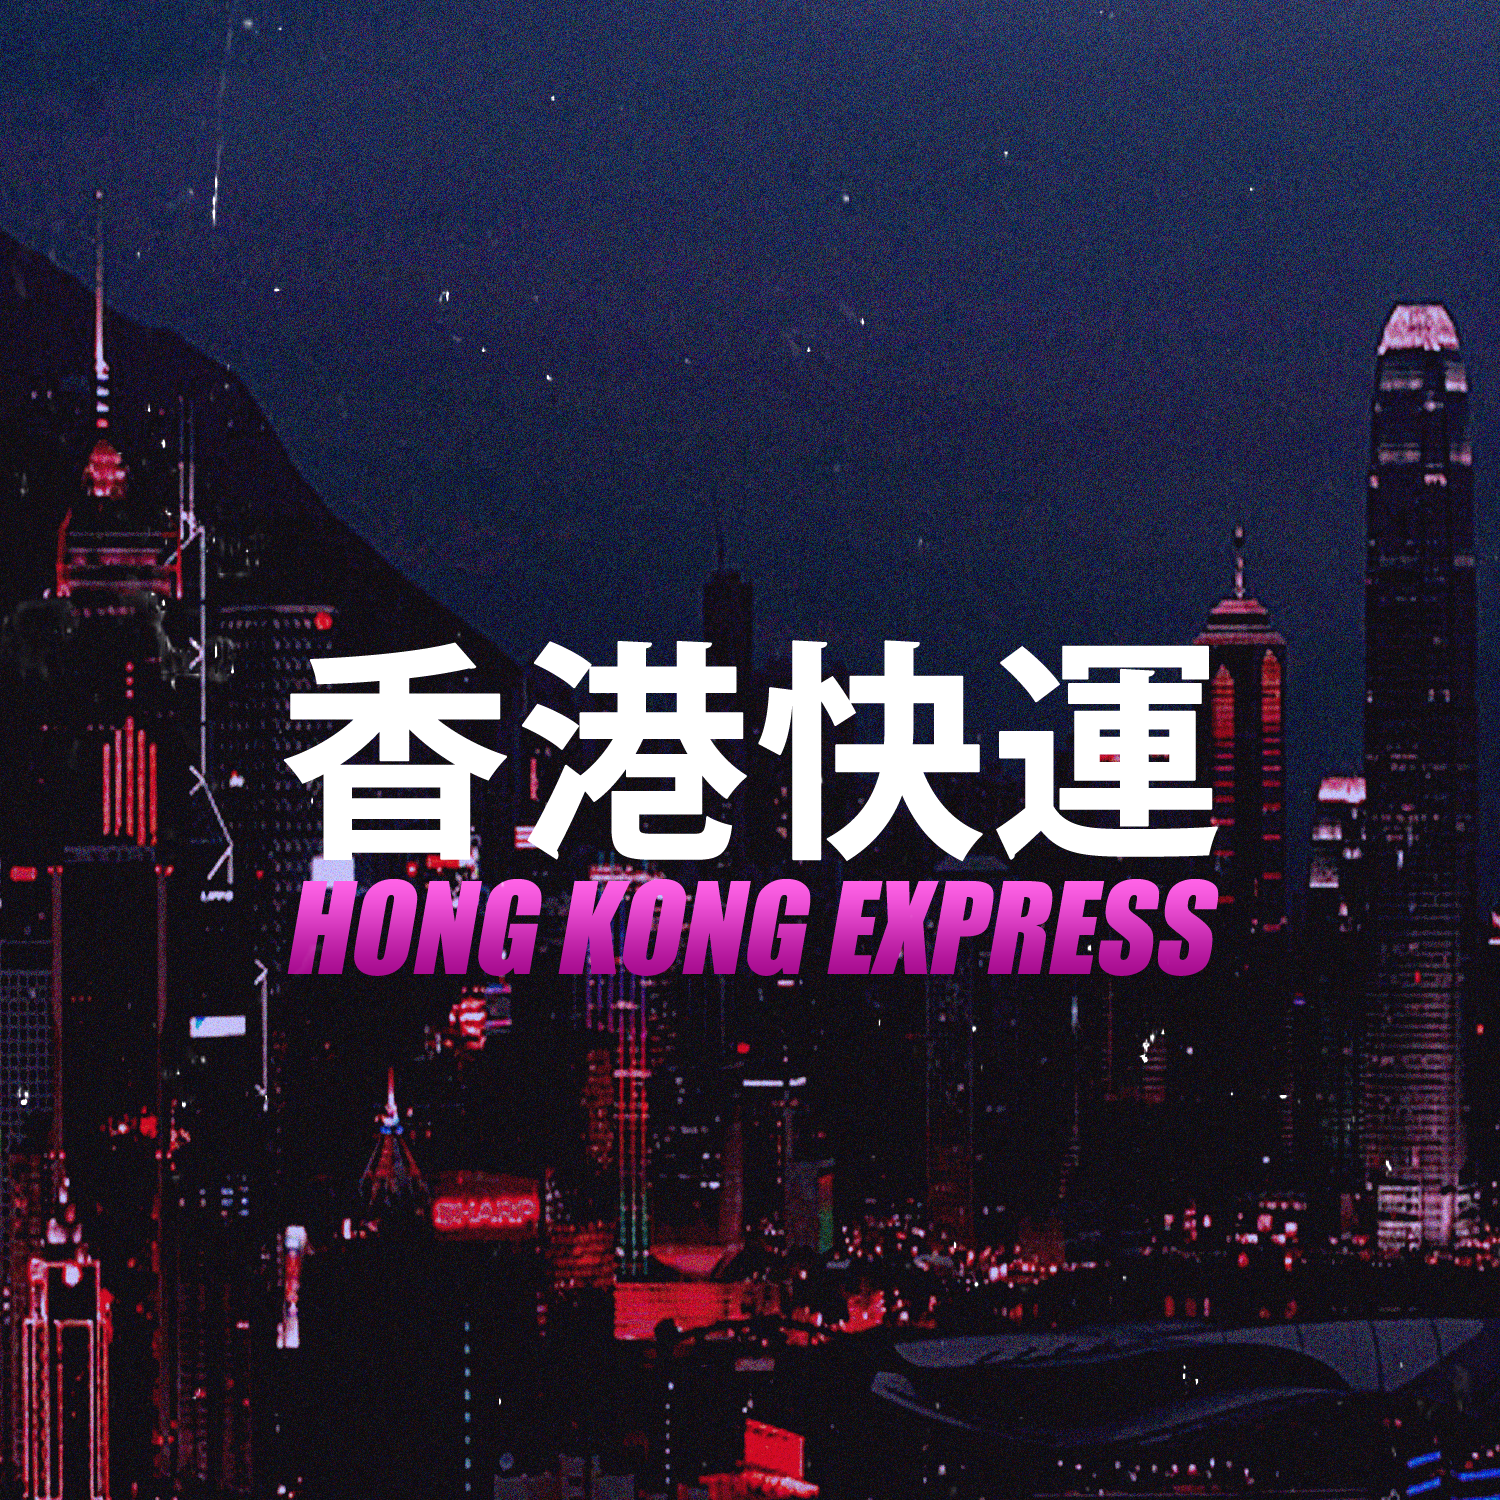 Hong Kong Express - Hong Kong Express